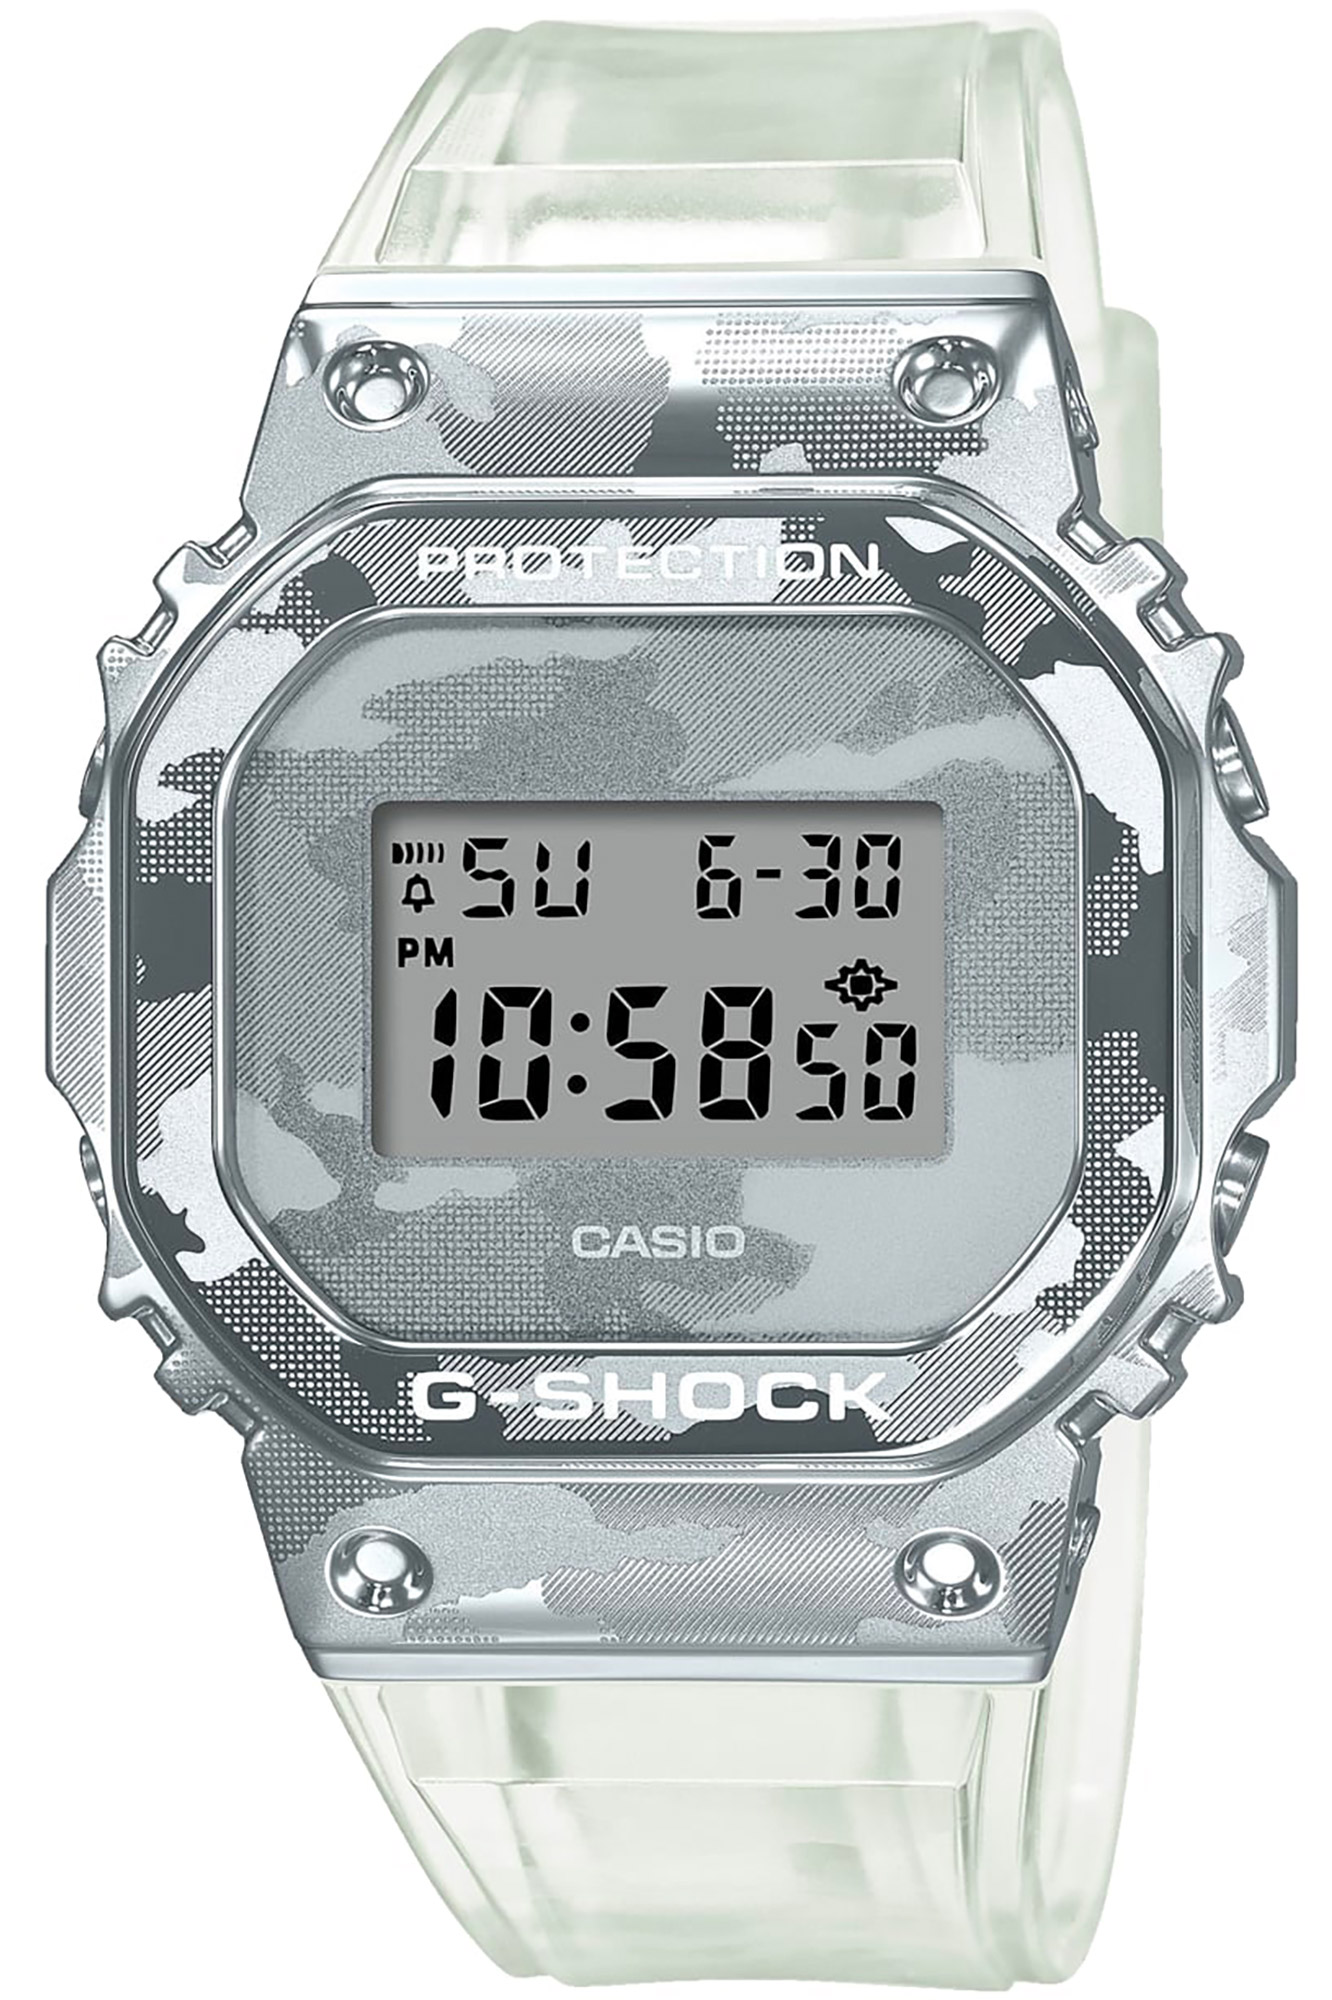 Reloj CASIO G-Shock gm-5600scm-1er